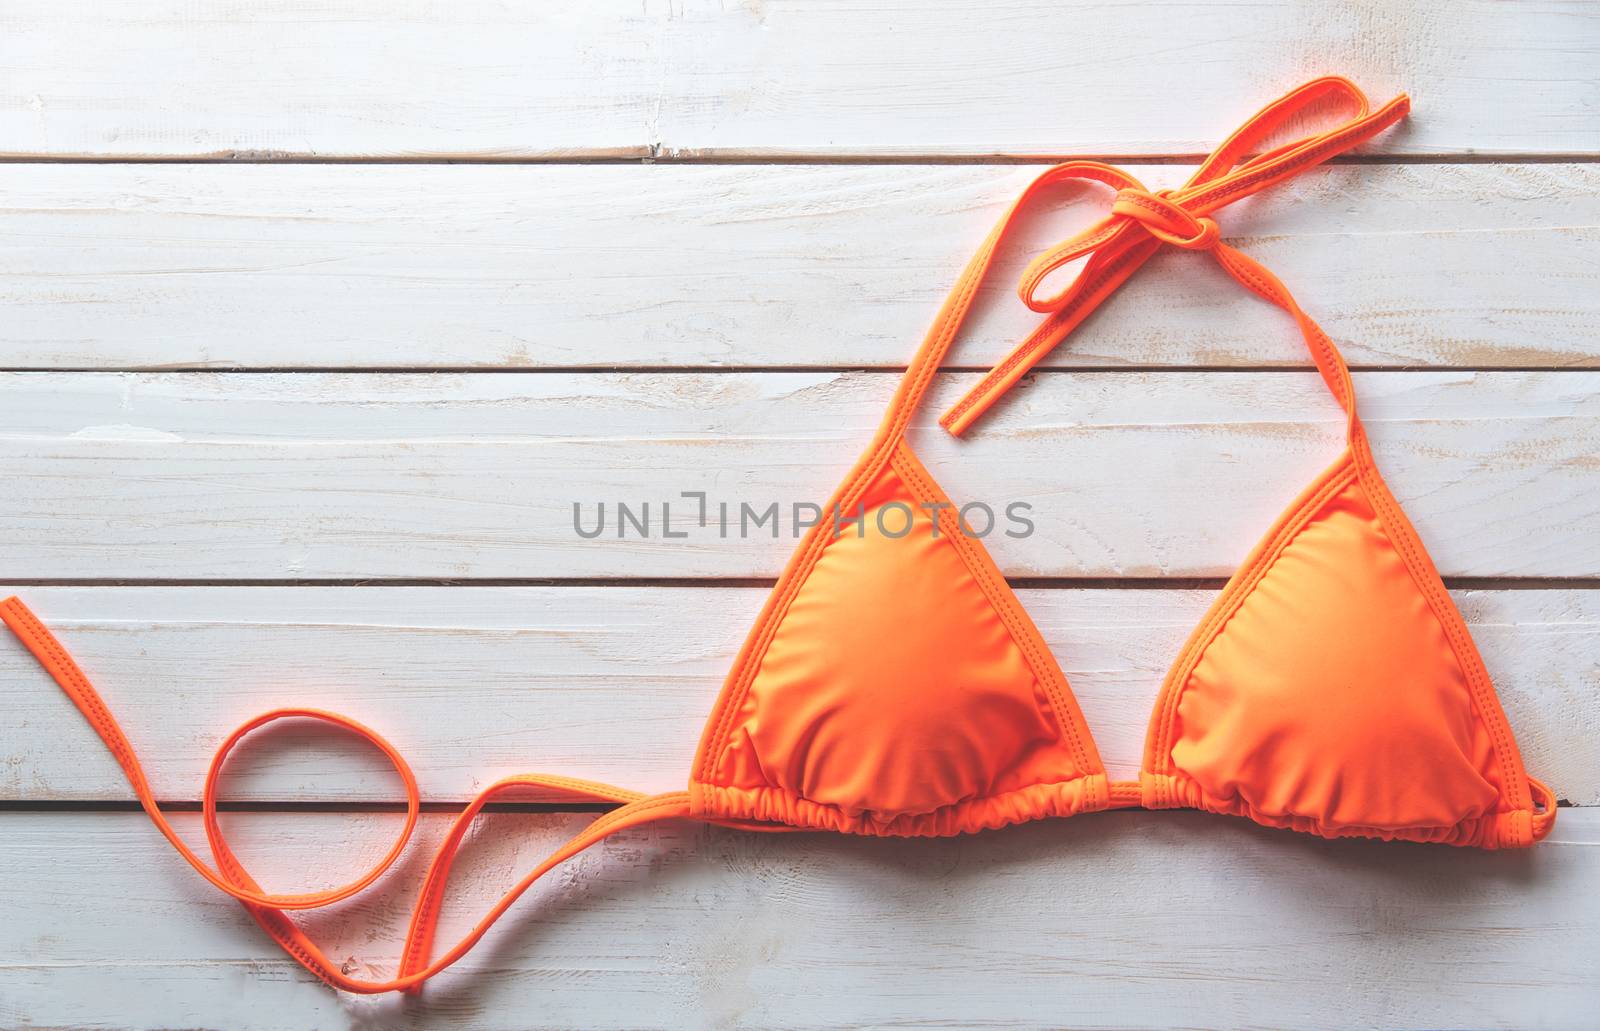  orange bikini rests on a wooden floor -summer and travel cocept.